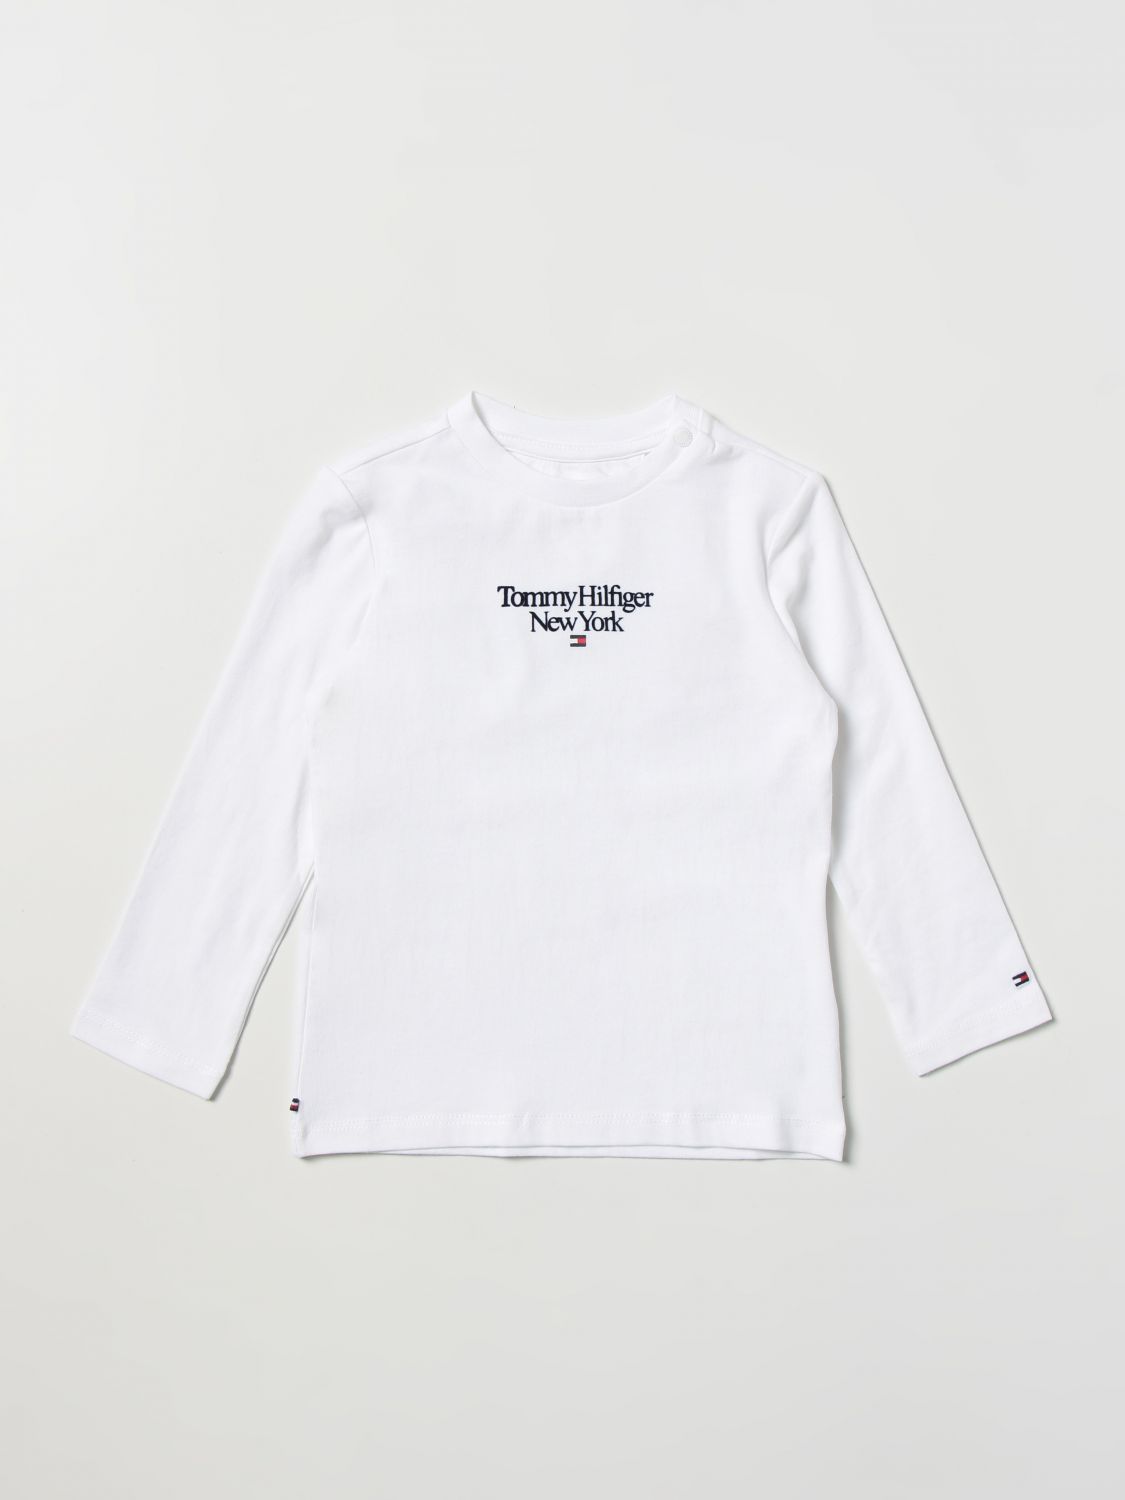 TOMMY HILFIGER: Camiseta bebé, Blanco Camiseta Tommy Hilfiger KN0KN01570 en línea GIGLIO.COM